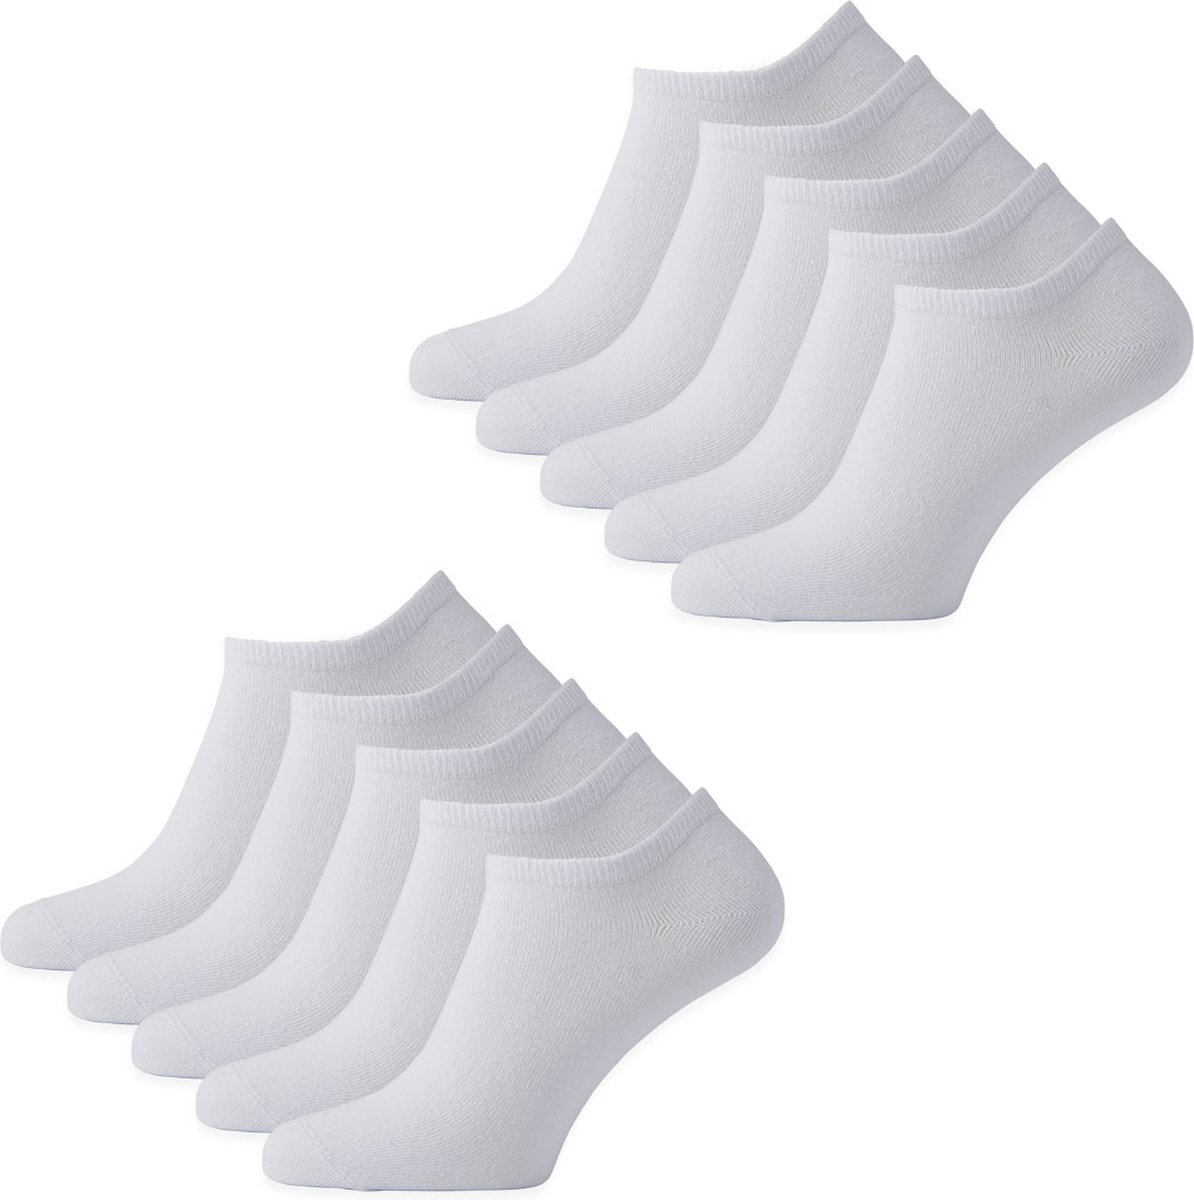 Sokjes.nl® 10 paar Witte enkelsokken - Maat 39/42